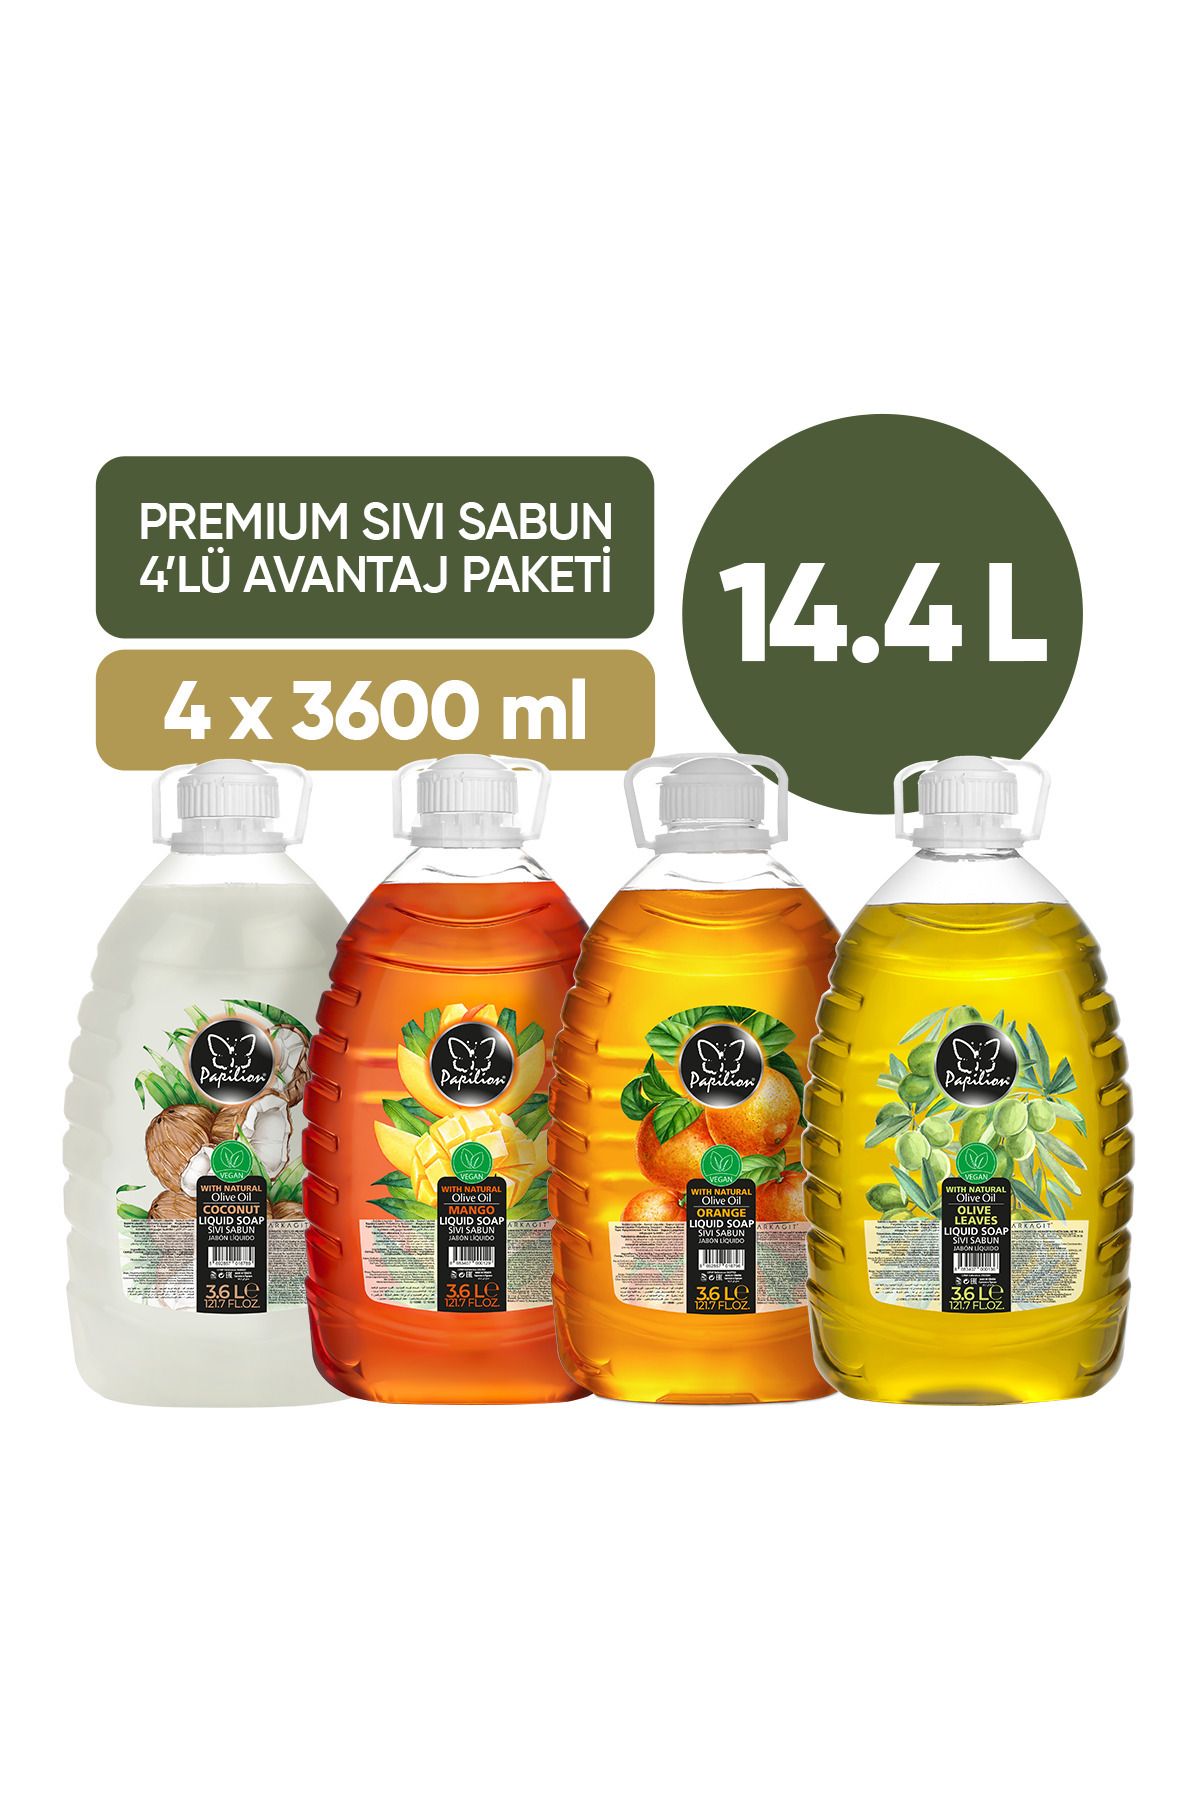 Papilion Premium Sıvı Sabun 4'lü Avantaj Paketi - 4x3600 ml